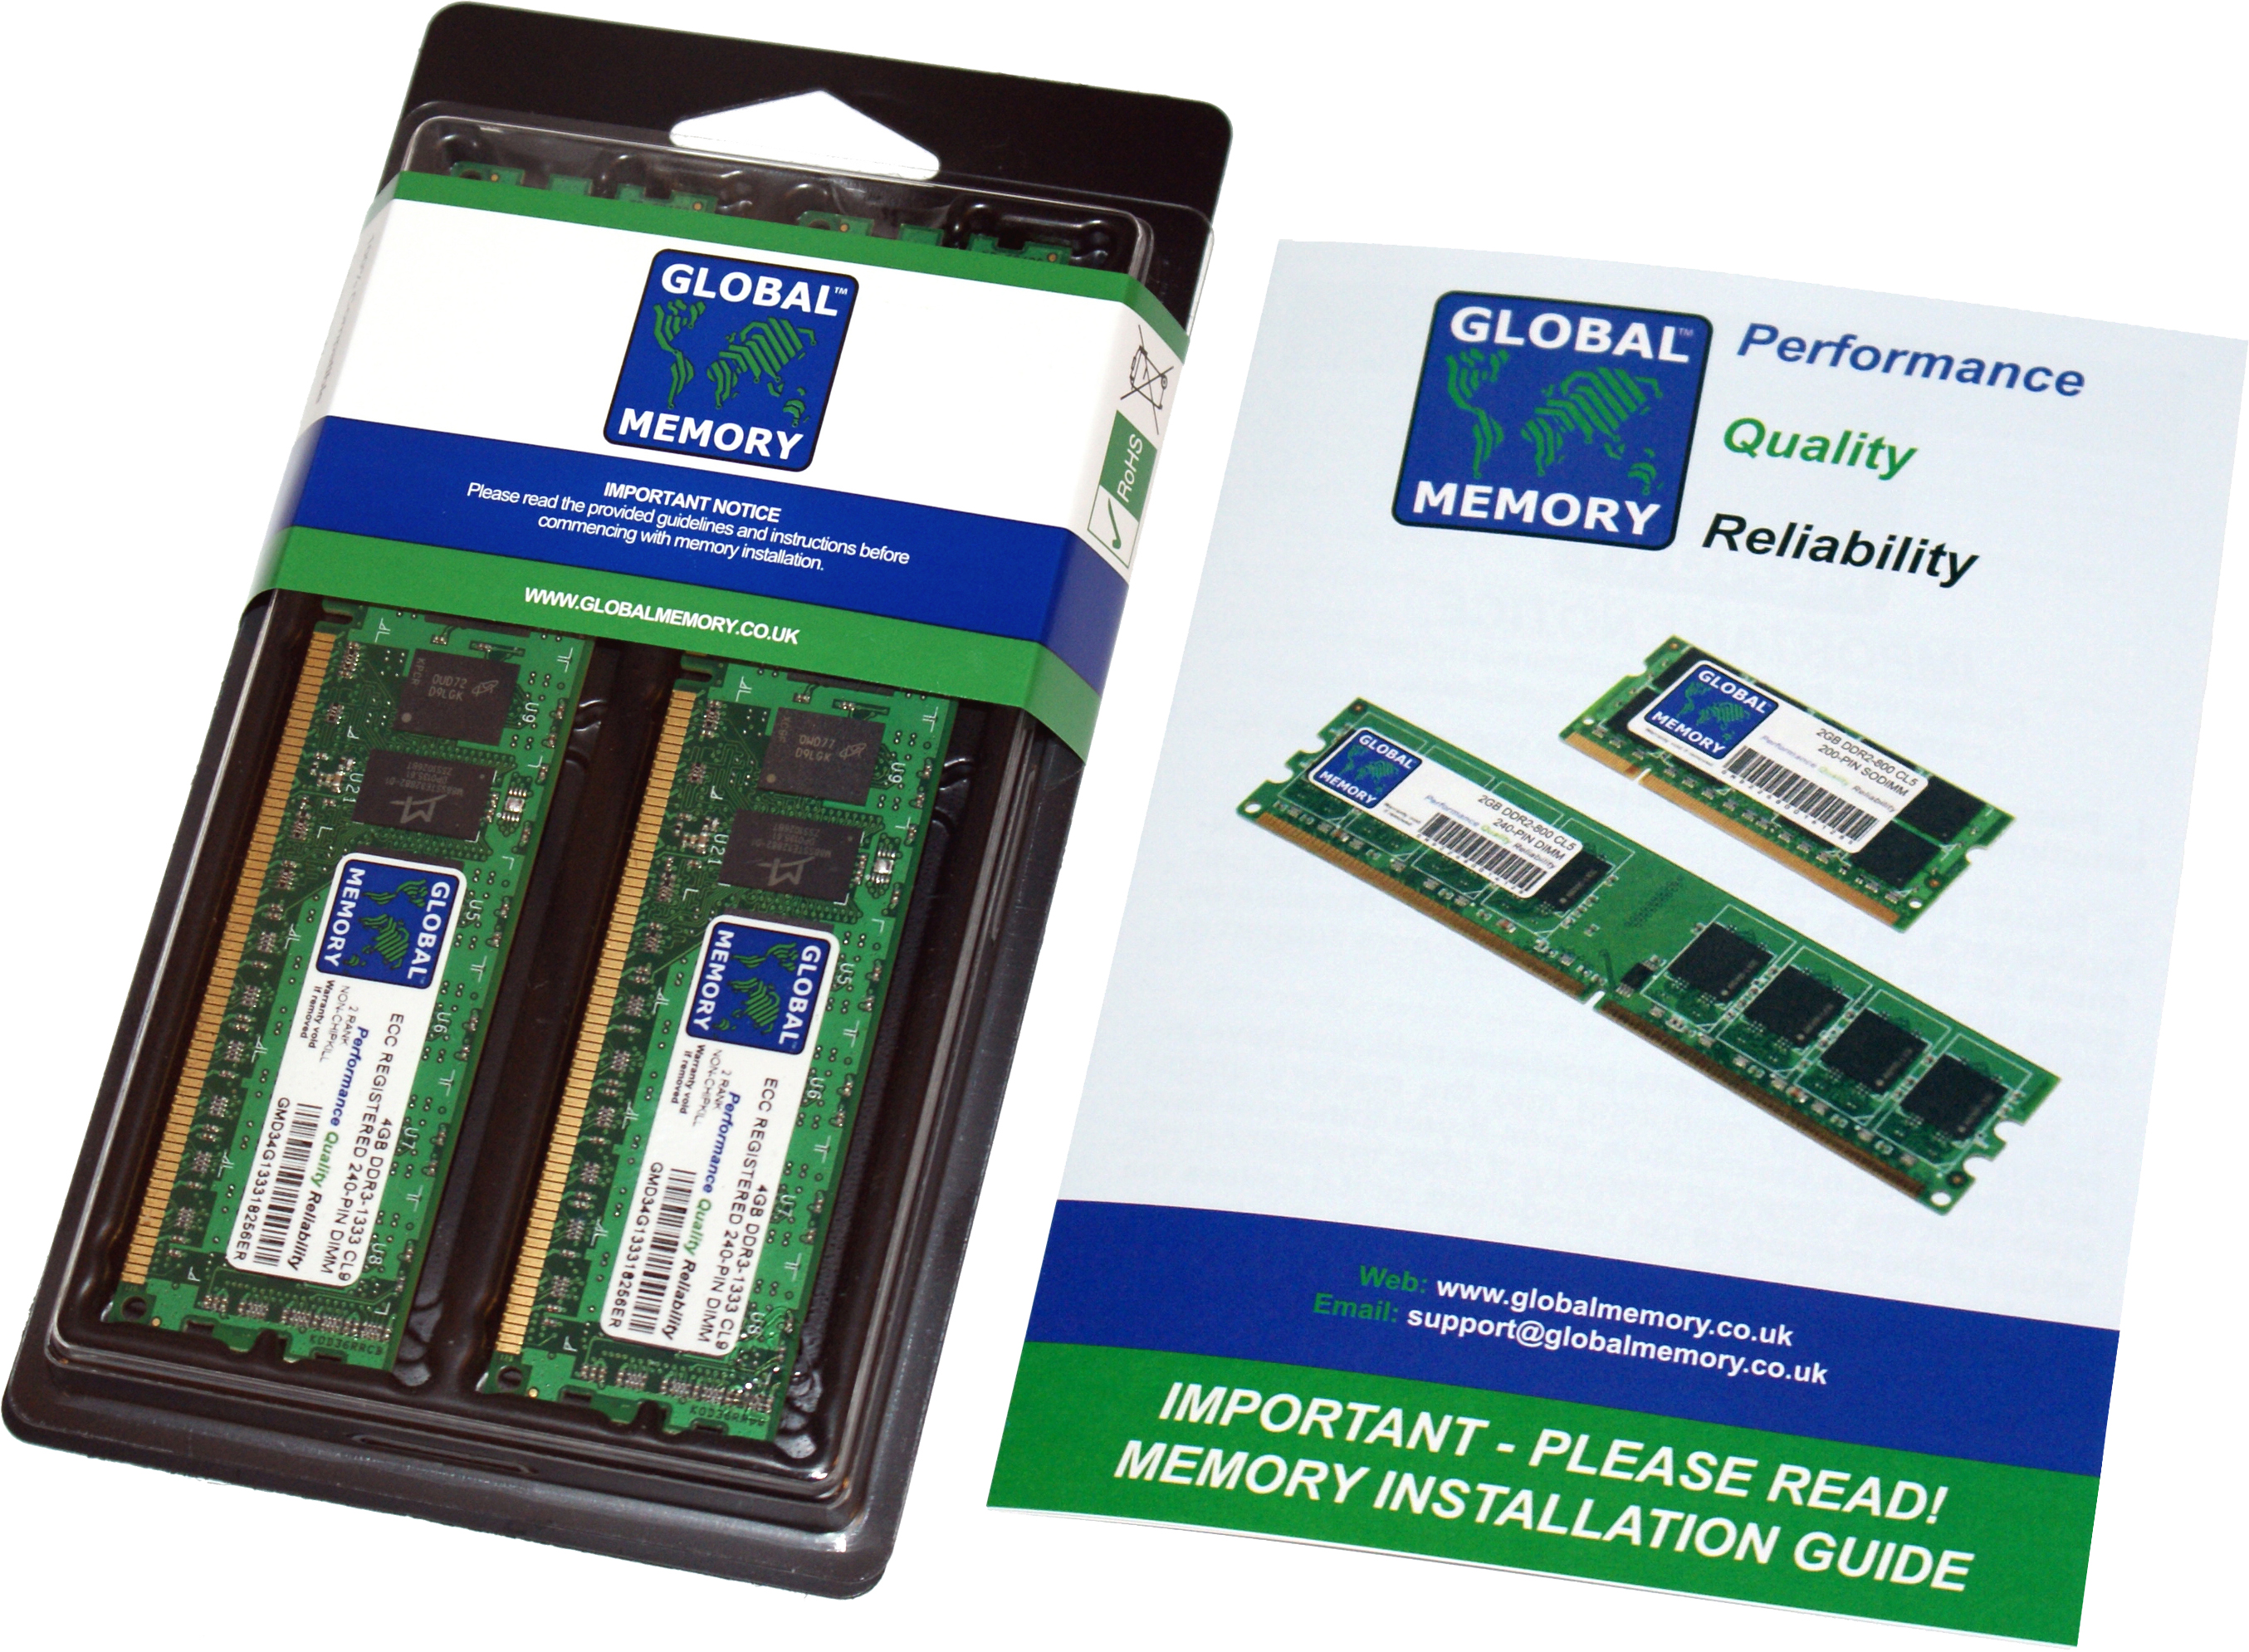 32GB (2 x 16GB) DDR4 2666MHz PC4-21300 288-PIN ECC REGISTERED DIMM (RDIMM) MEMORY RAM KIT FOR DELL SERVERS/WORKSTATIONS (4 RANK KIT CHIPKILL)